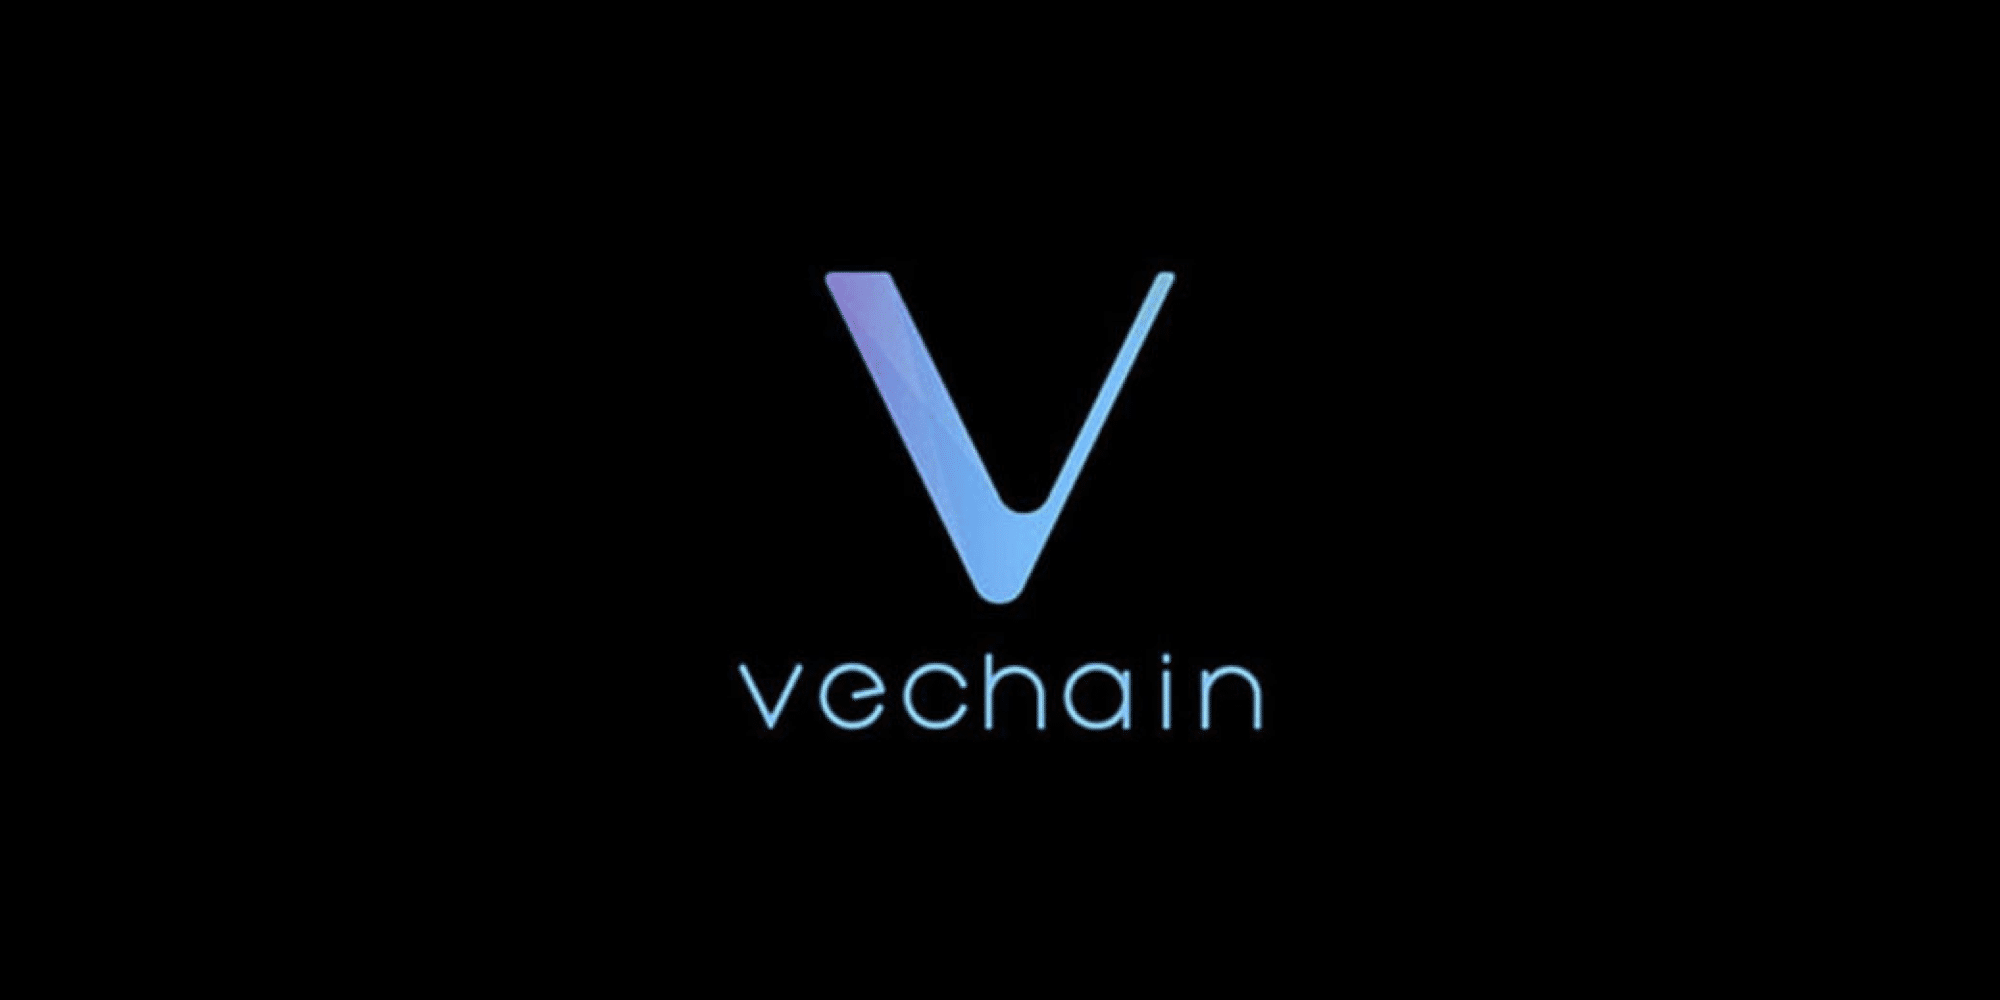 تحلیل تکنیکال قیمت رمز ارز وی چین VeChain؛ ۱6 فروردین - پیش بینی قیمت وی چین (VeChain) ؛ شنبه ۲۸ فروردین